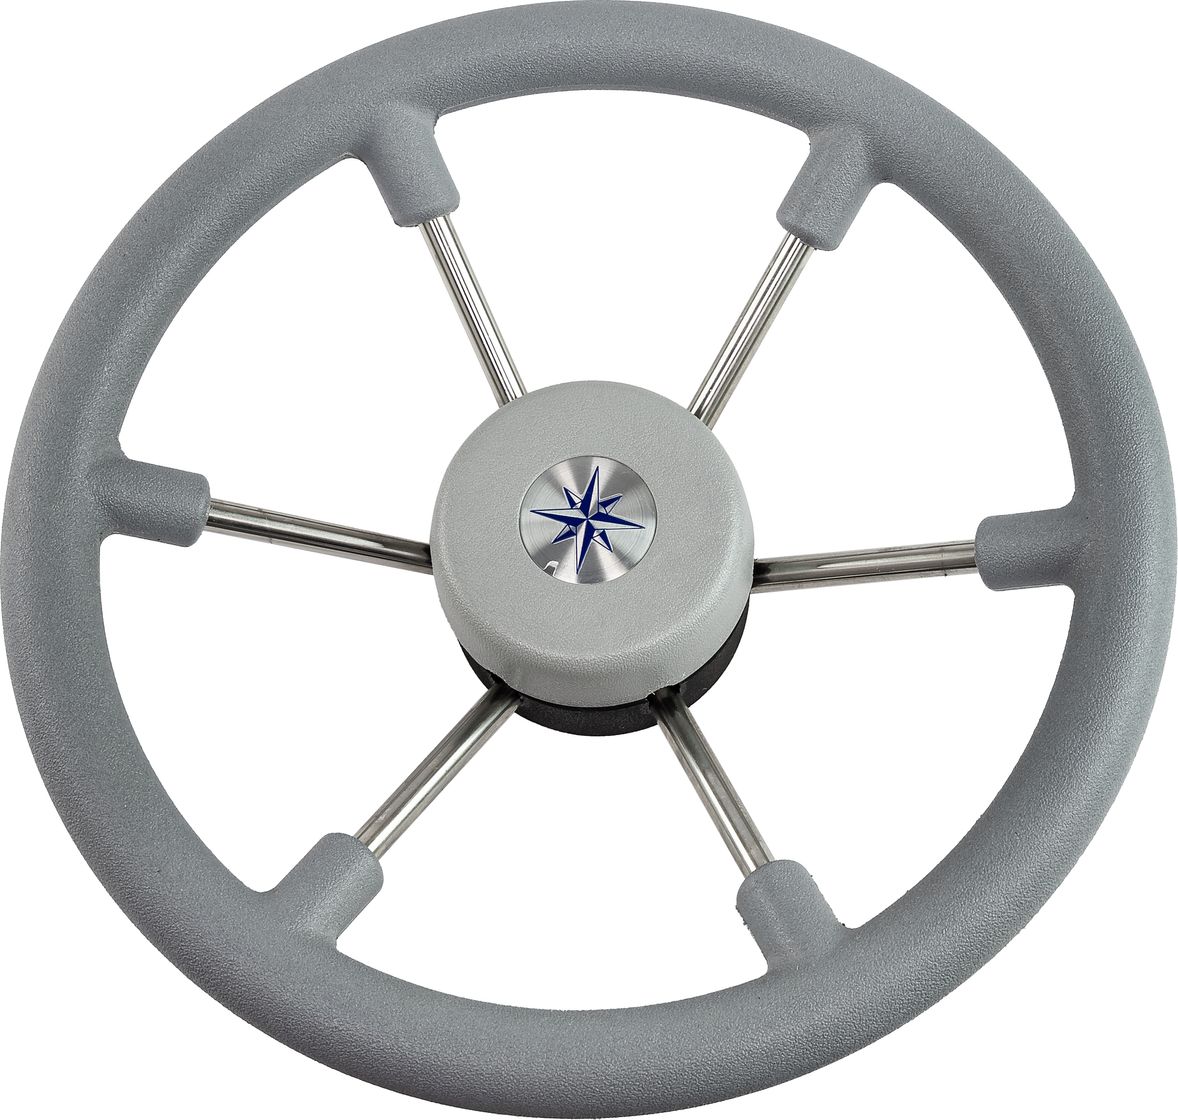 Рулевое колесо LEADER TANEGUM серый обод серебряные спицы д. 330 мм VN7330-03